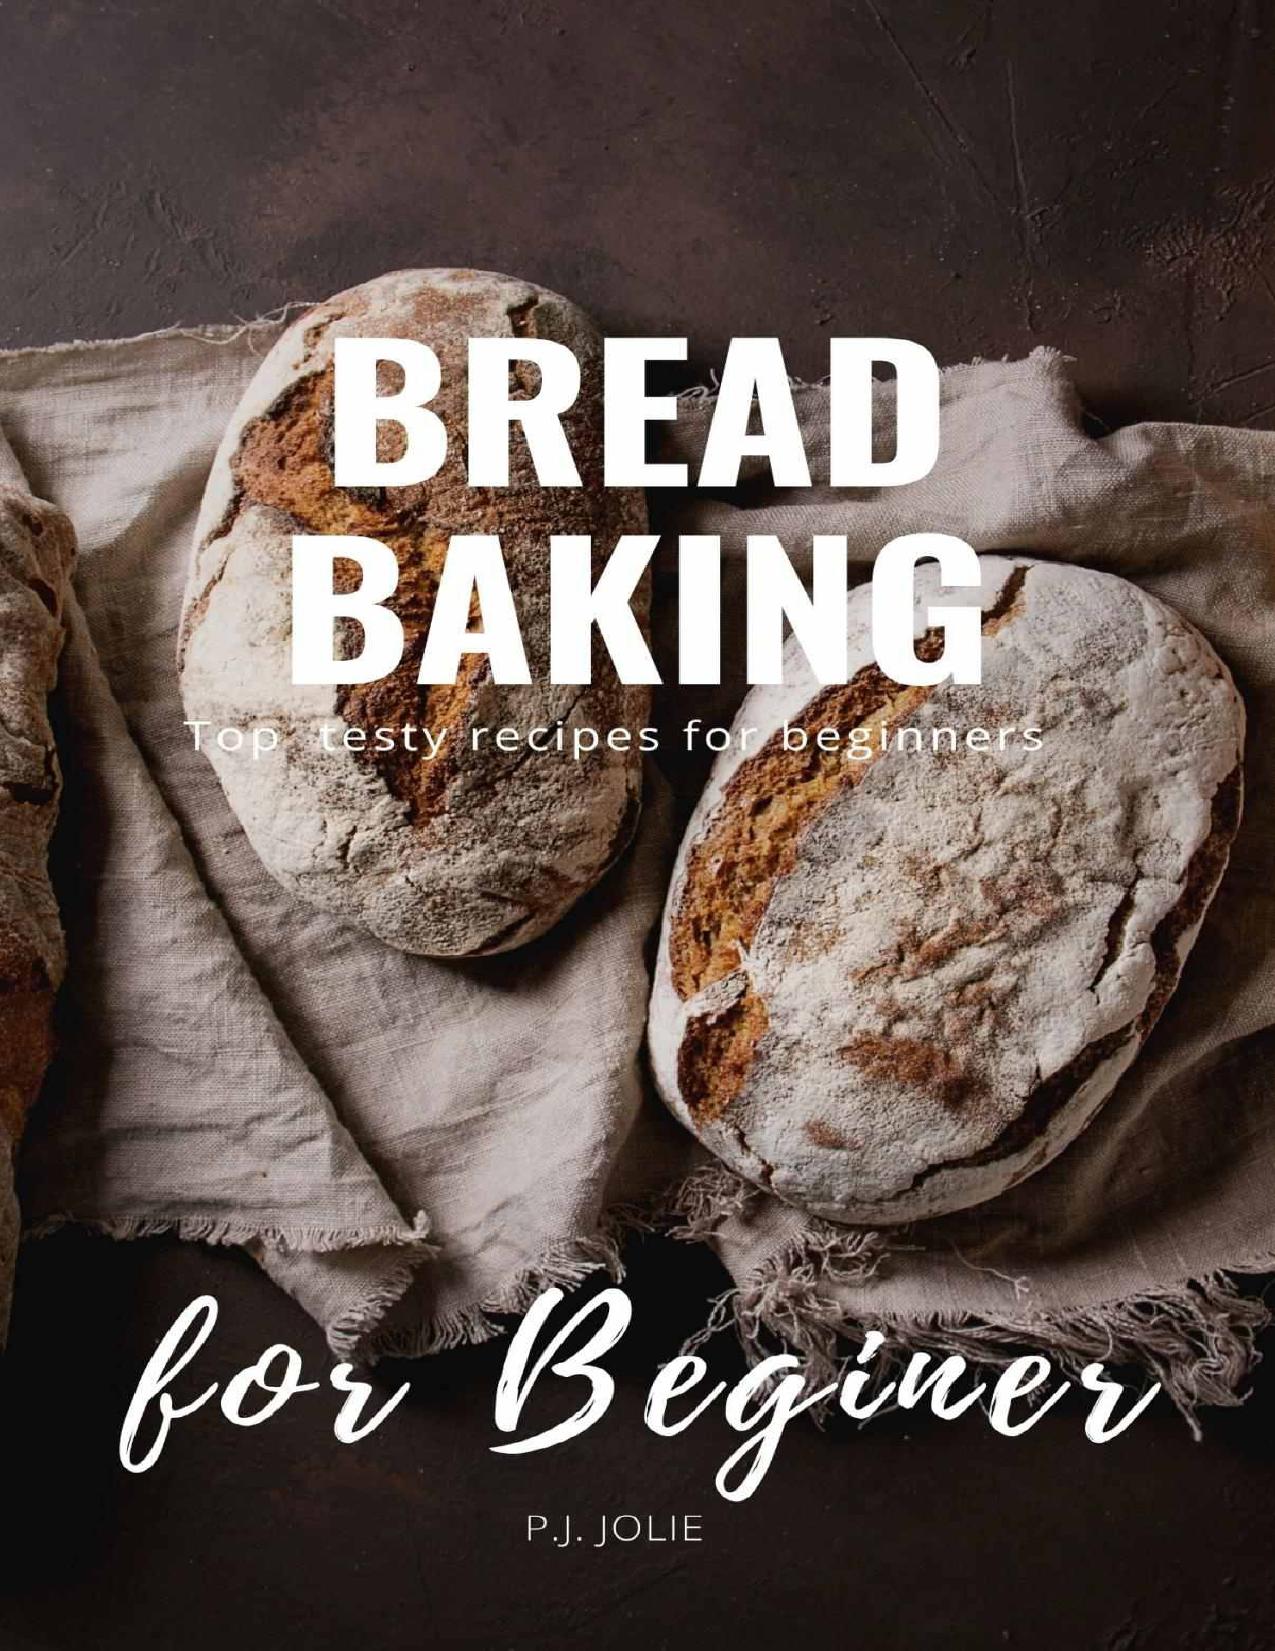 Bread Baking: Top testy recipes for beginners (Homemade Bread Baking II) by P.J. Jolie